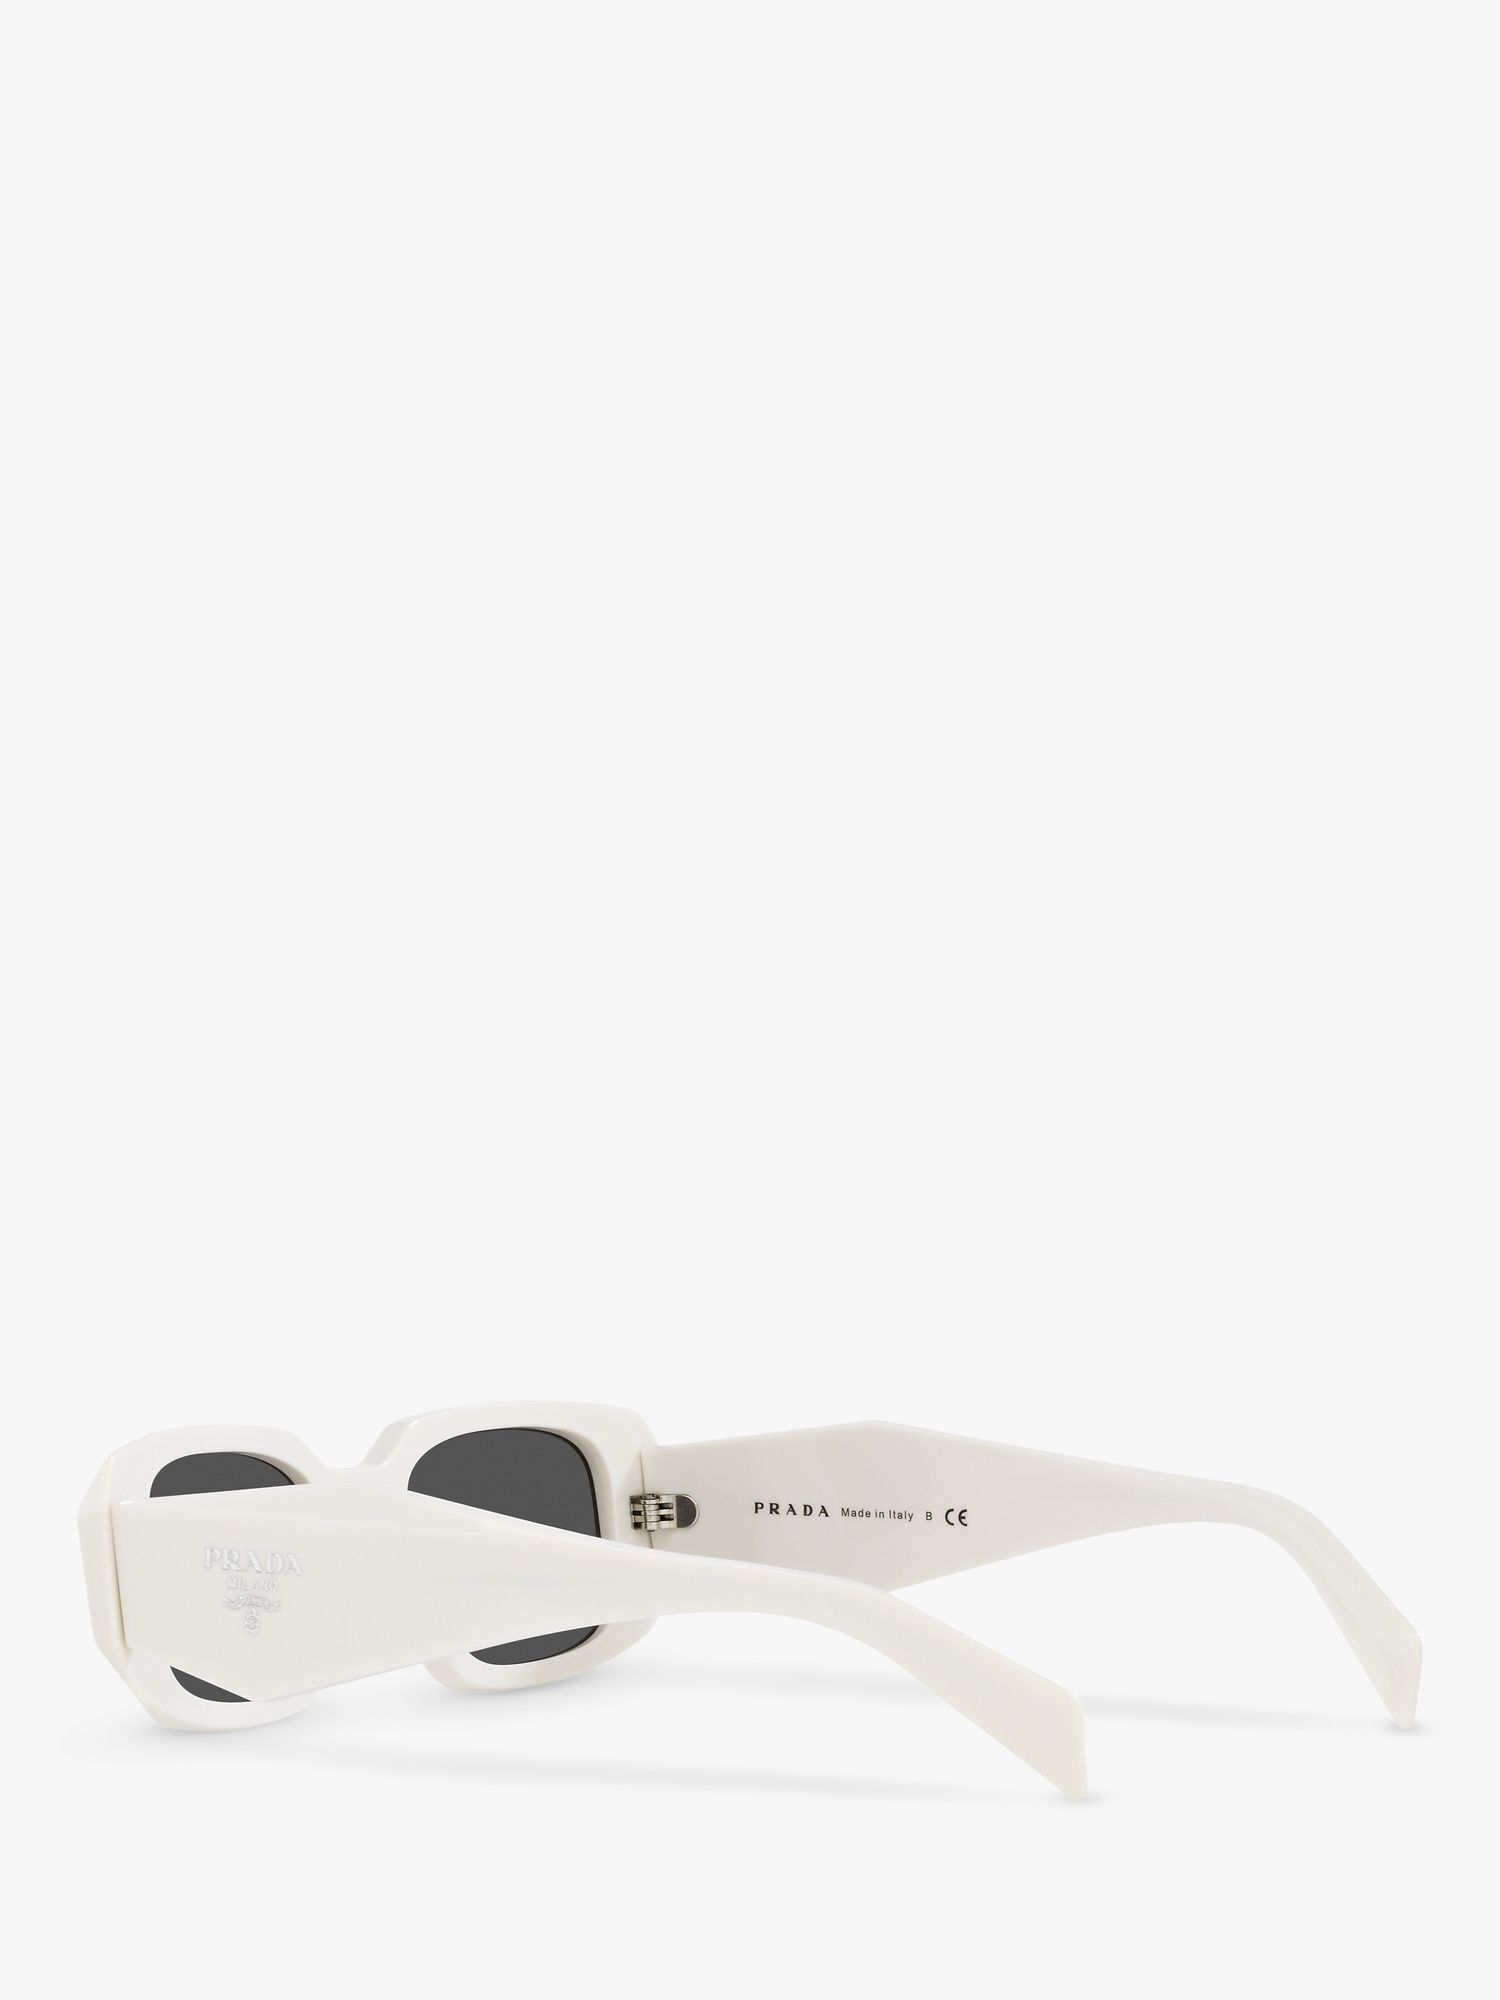 Prada PR17WS Women's Rectangular Sunglasses, White/Black at John Lewis ...